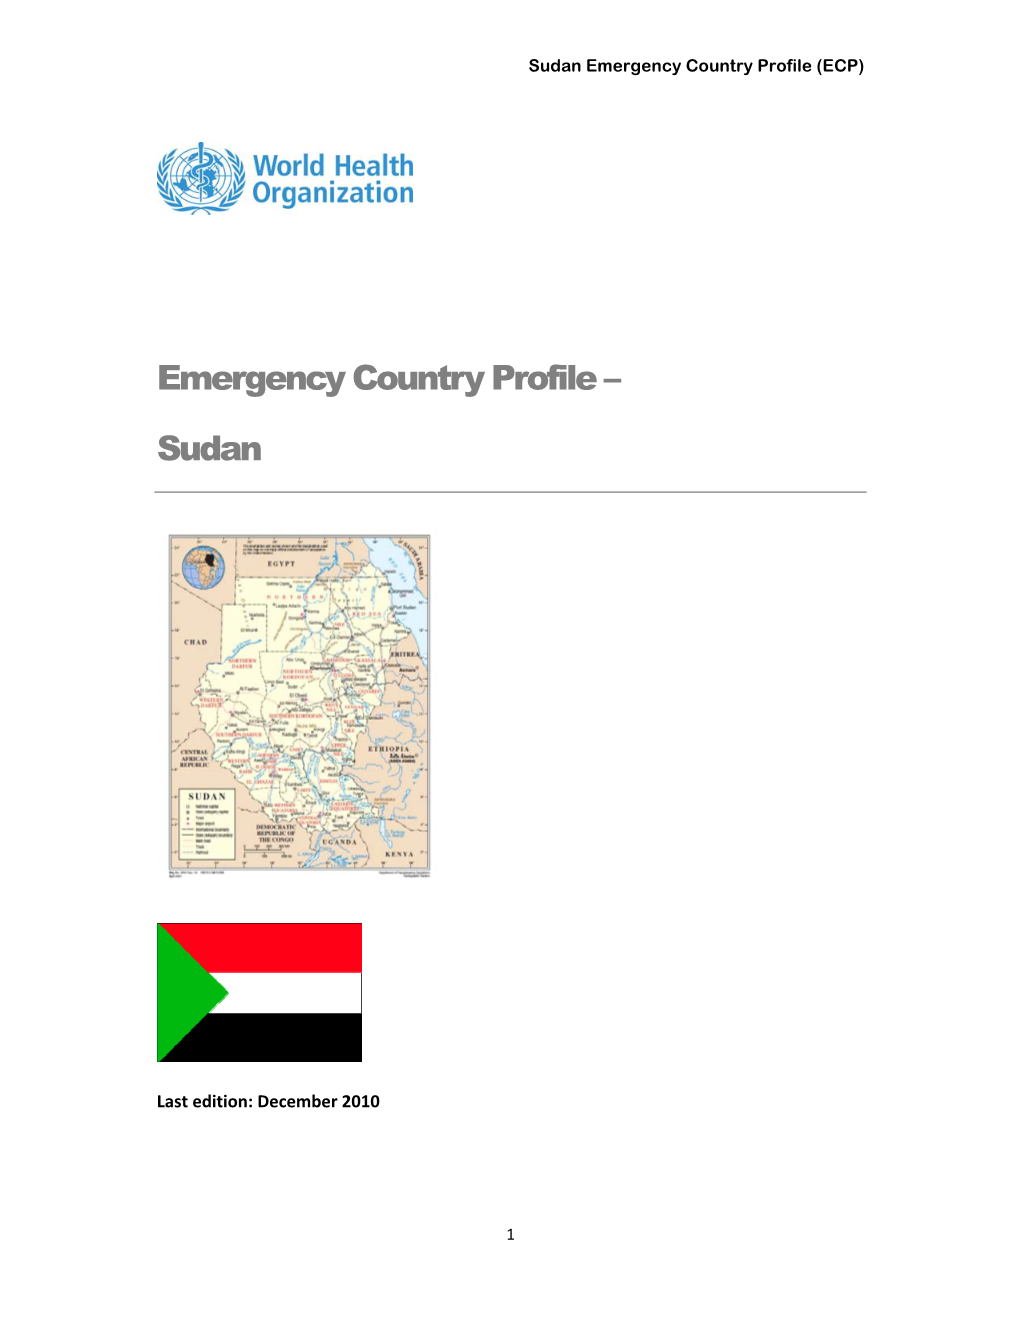 Emergency Country Profile – Sudan